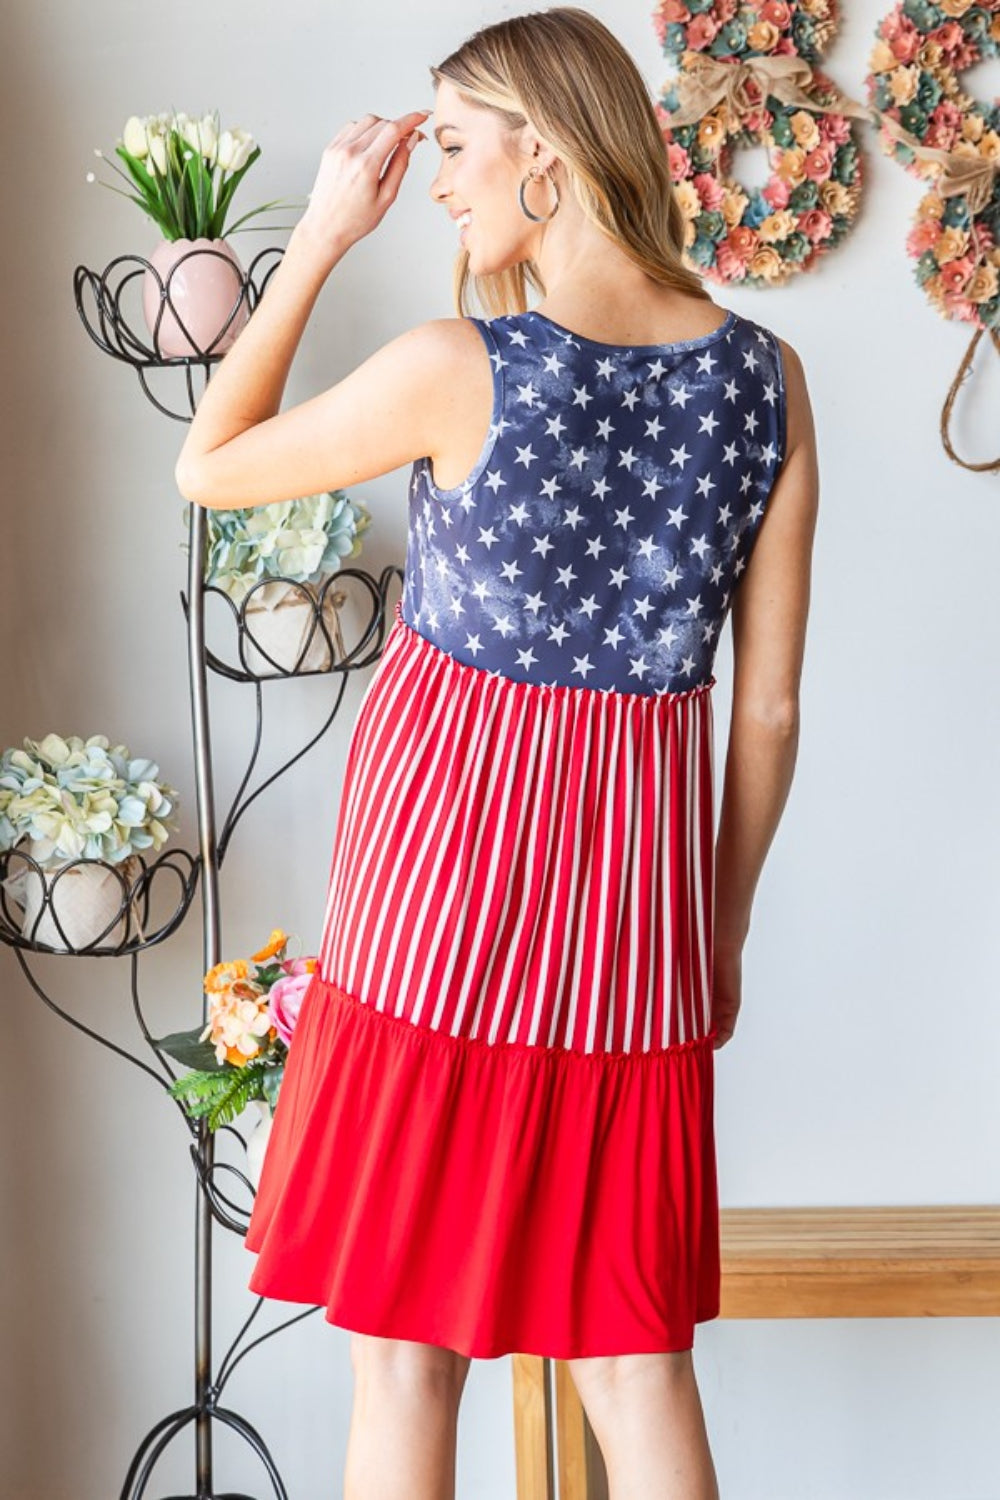 Heimish Full Size US Flag Theme Contrast Tank Dress